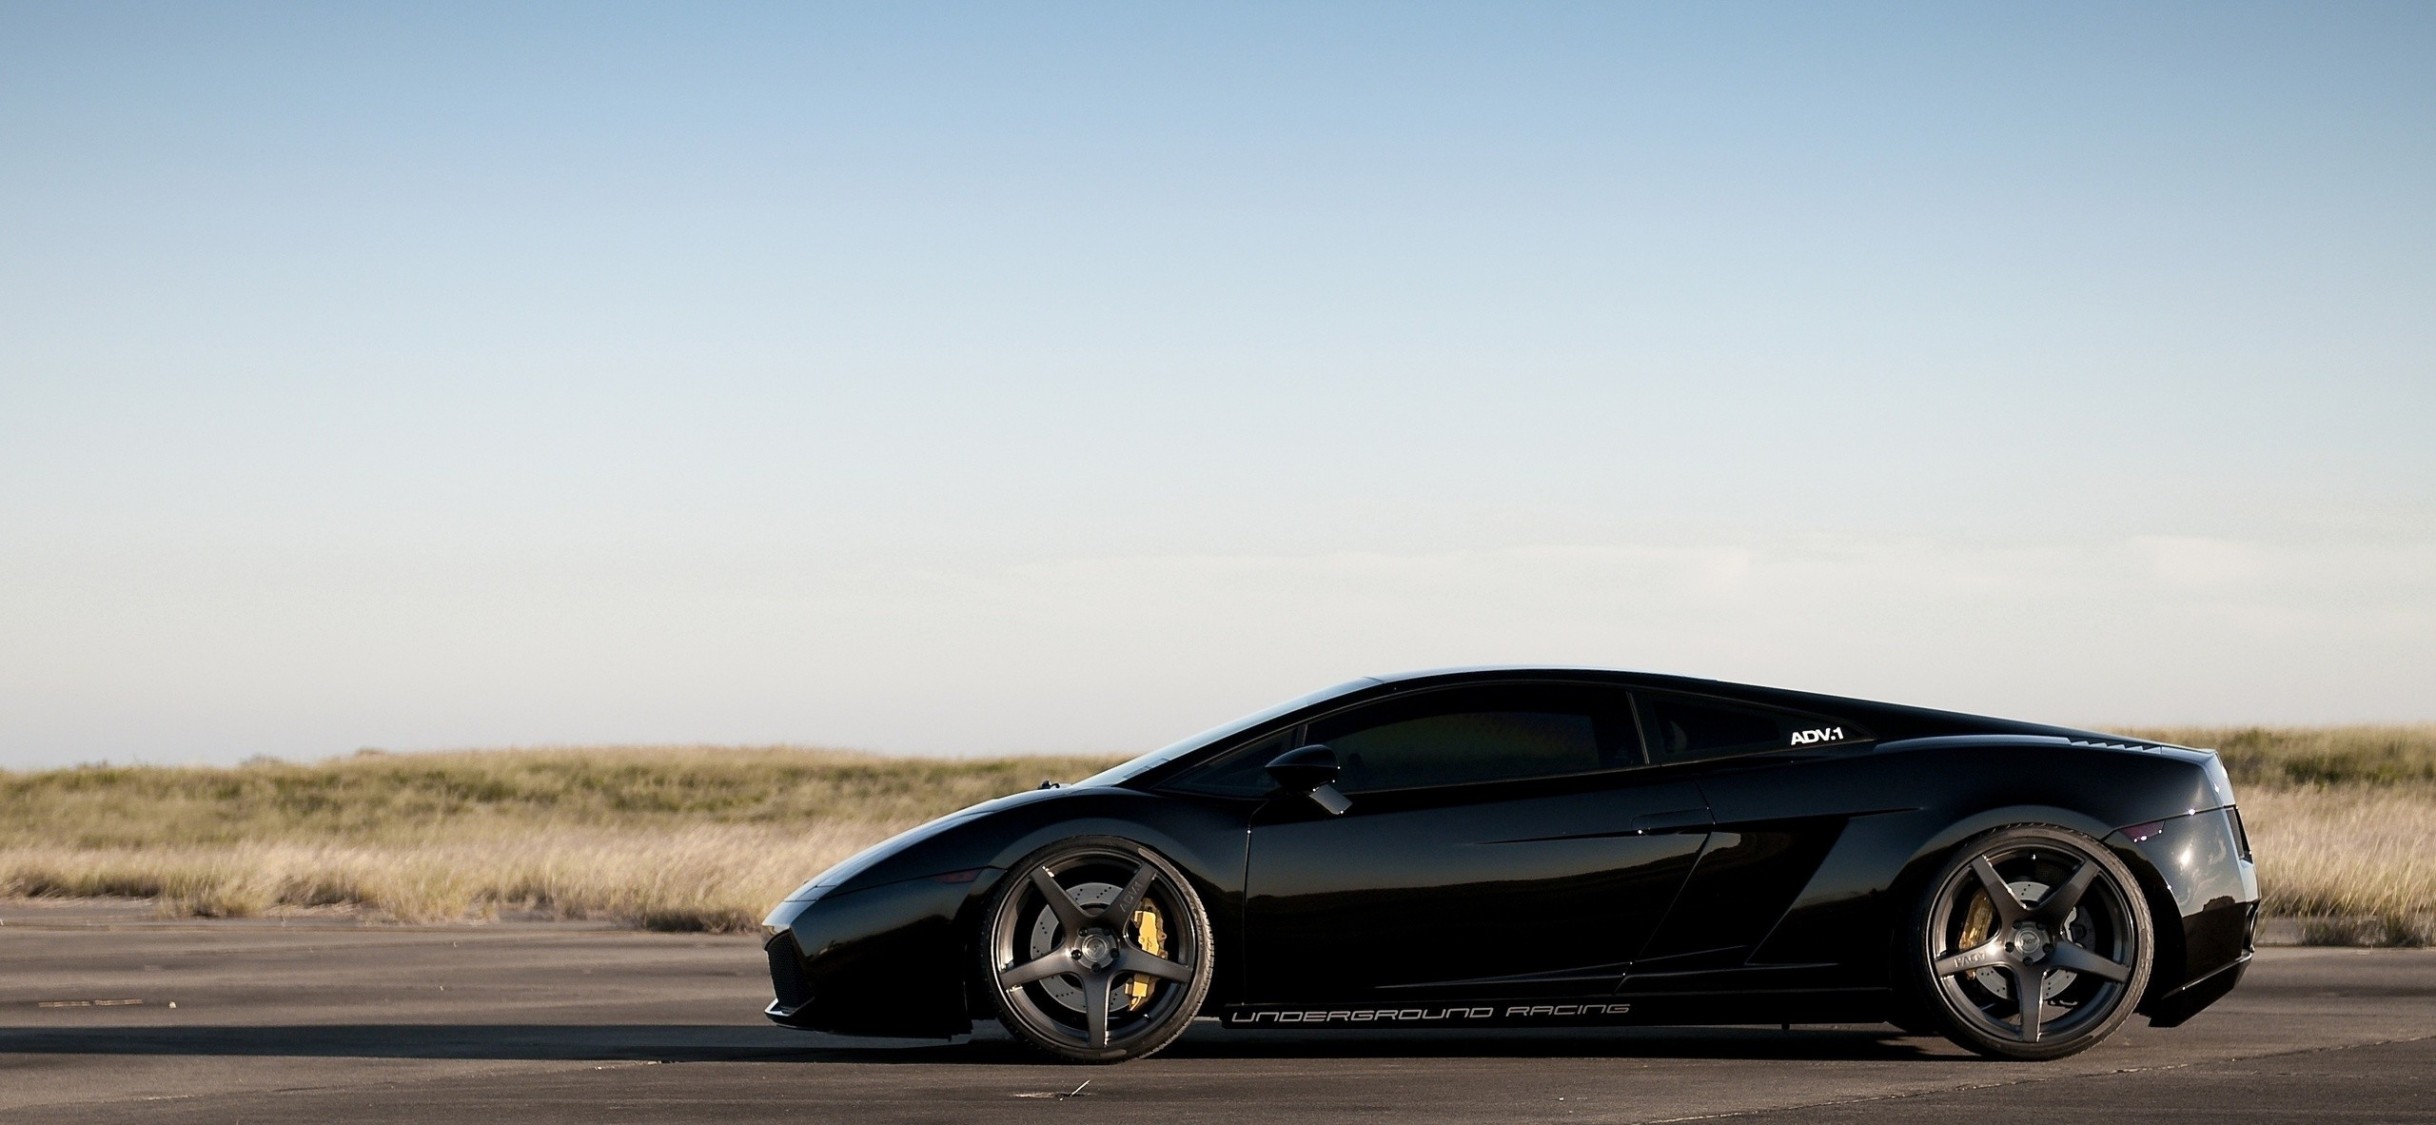 Lamborghini Gallardo Side View - HD Wallpaper 